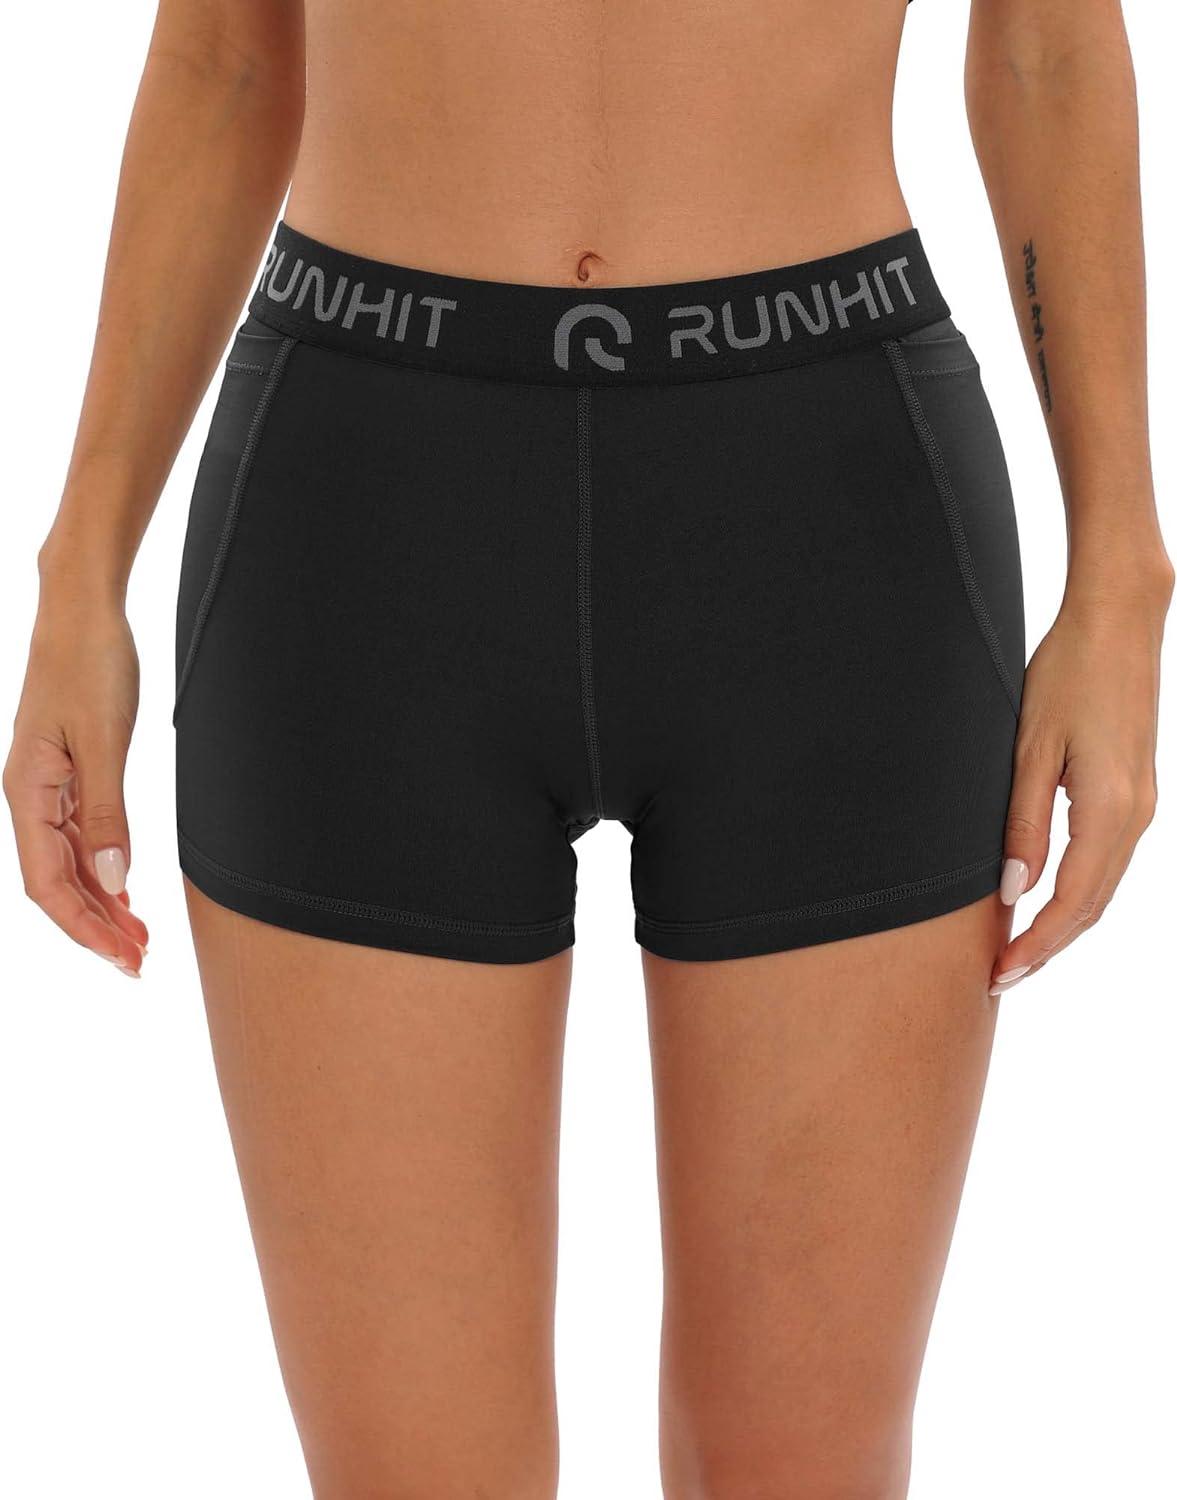 Runhit Men's Compression Shorts(3 Pack), Spandex Running Biker